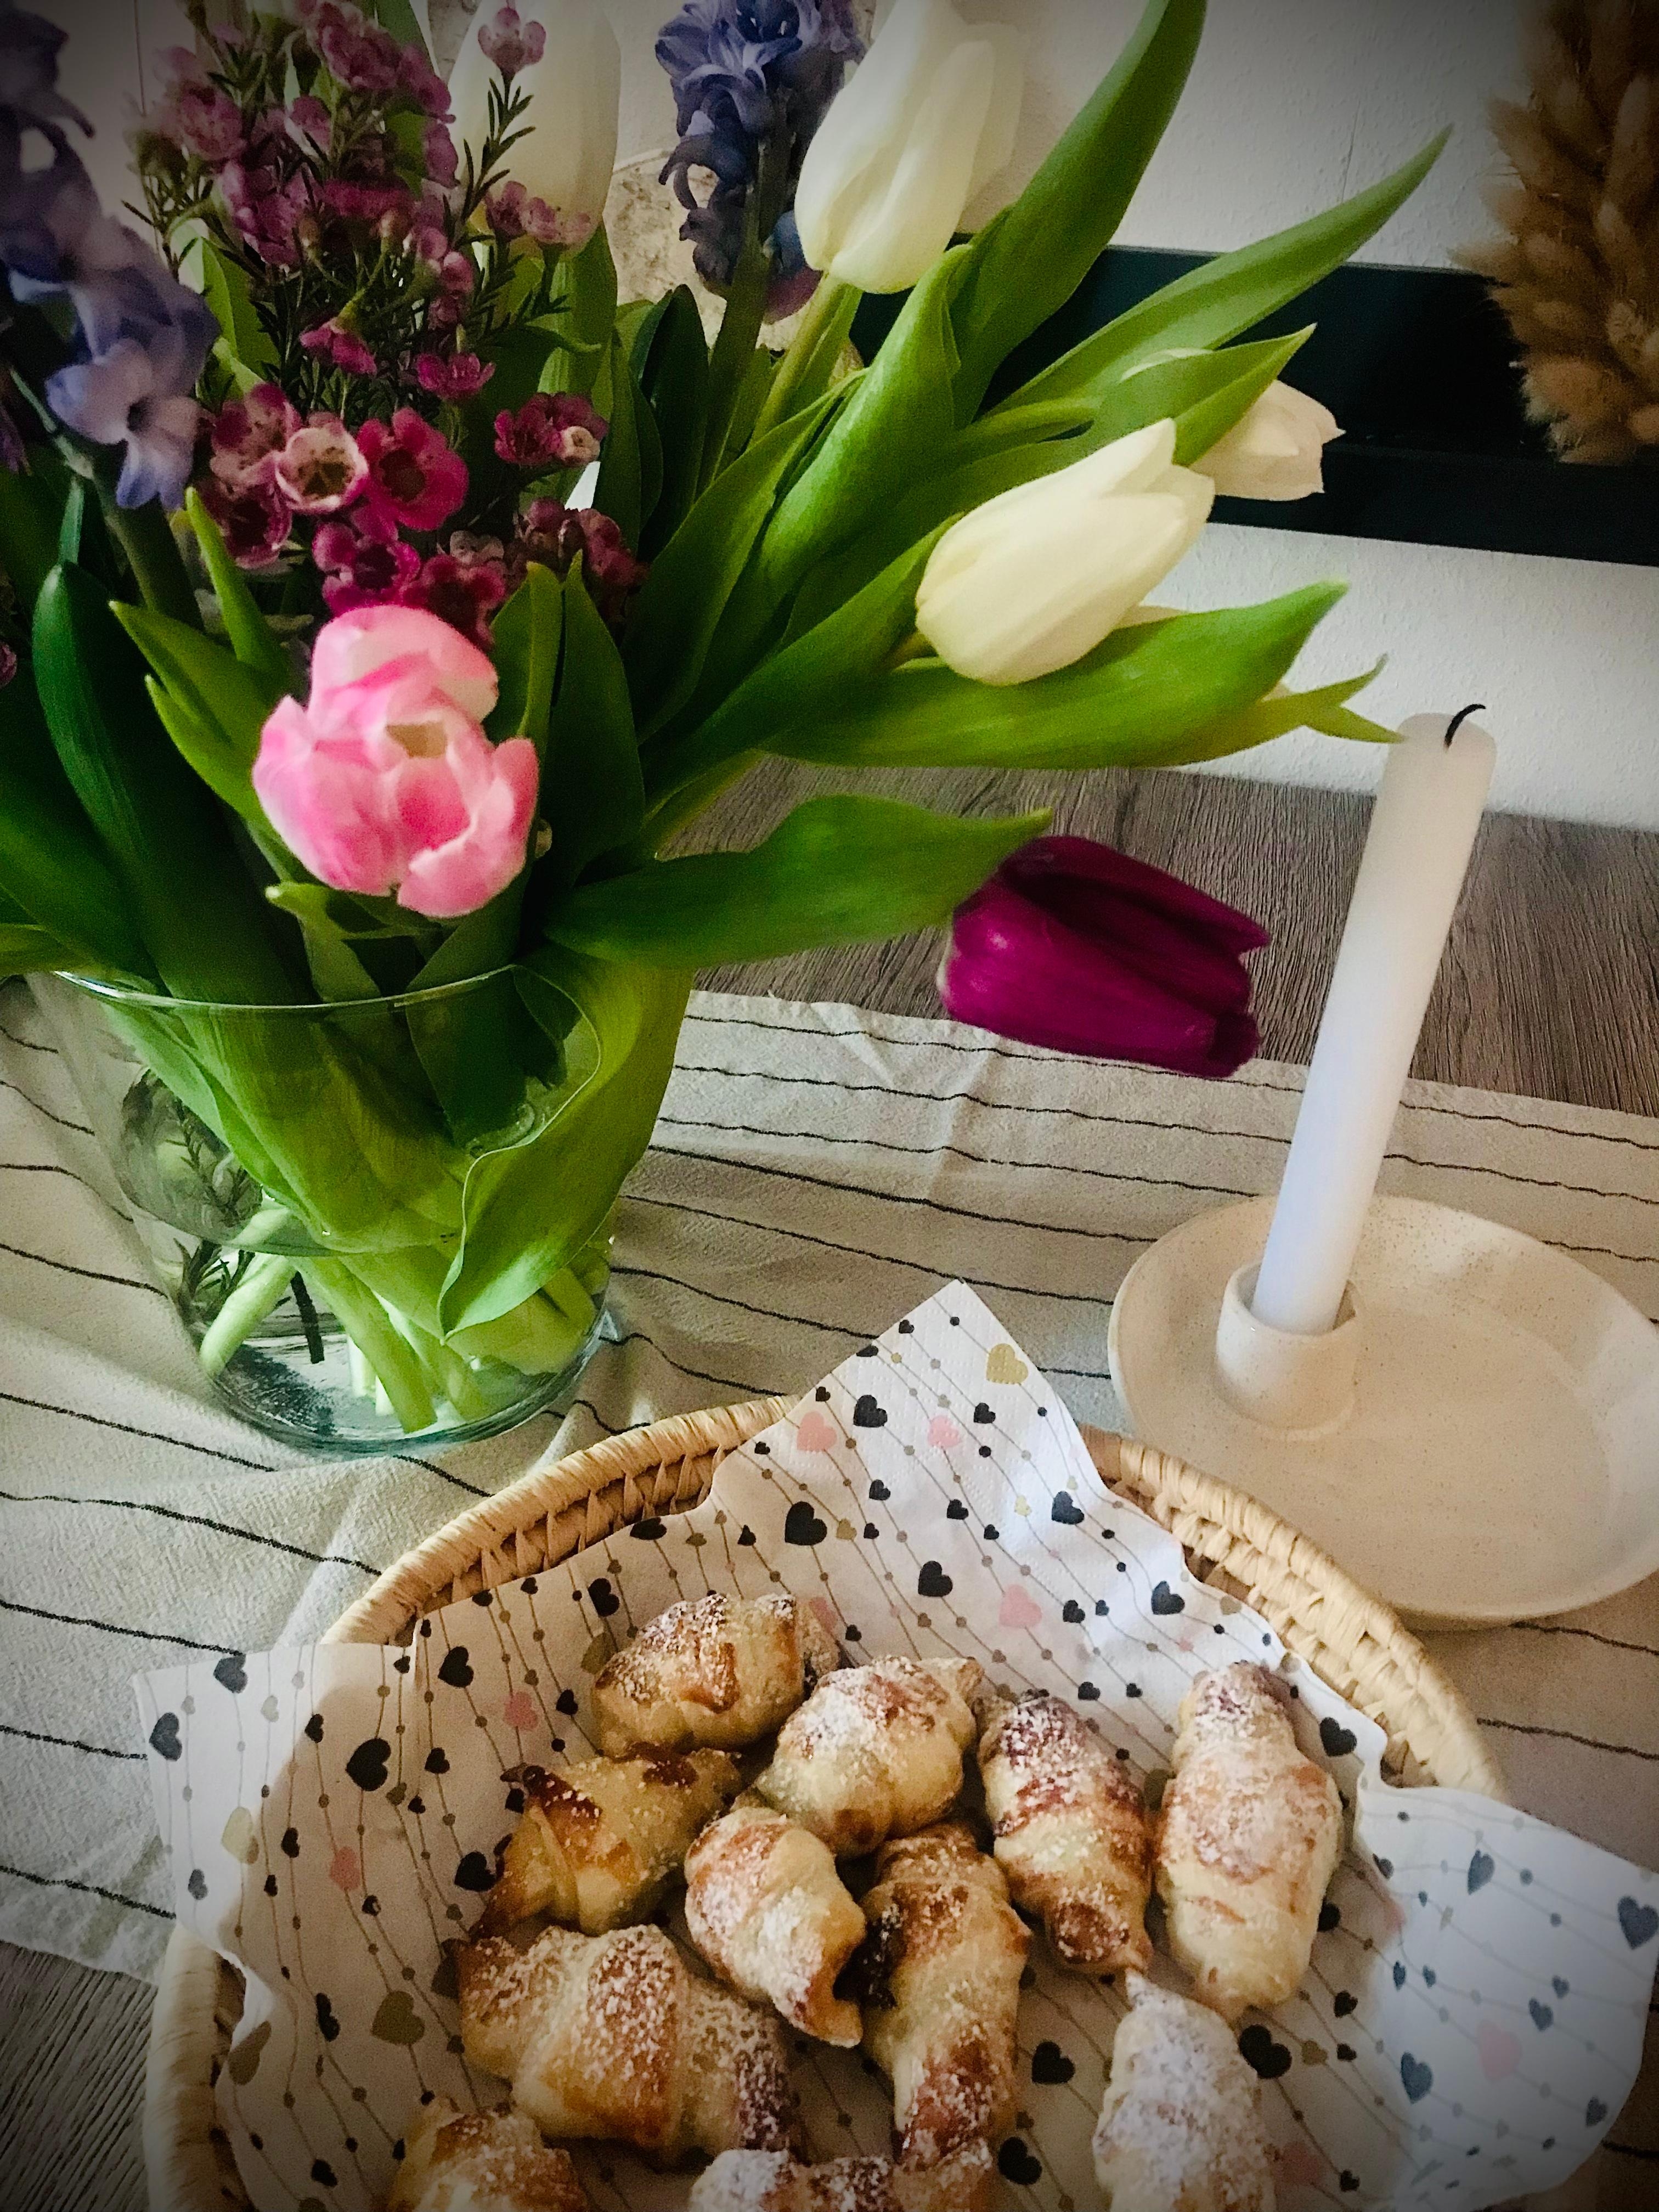 Happy weekend 💐
#flower #suesses #tisch #tischdecke #vase #kerze #korb 
#januar #home #cozy #nutellahoernchen 